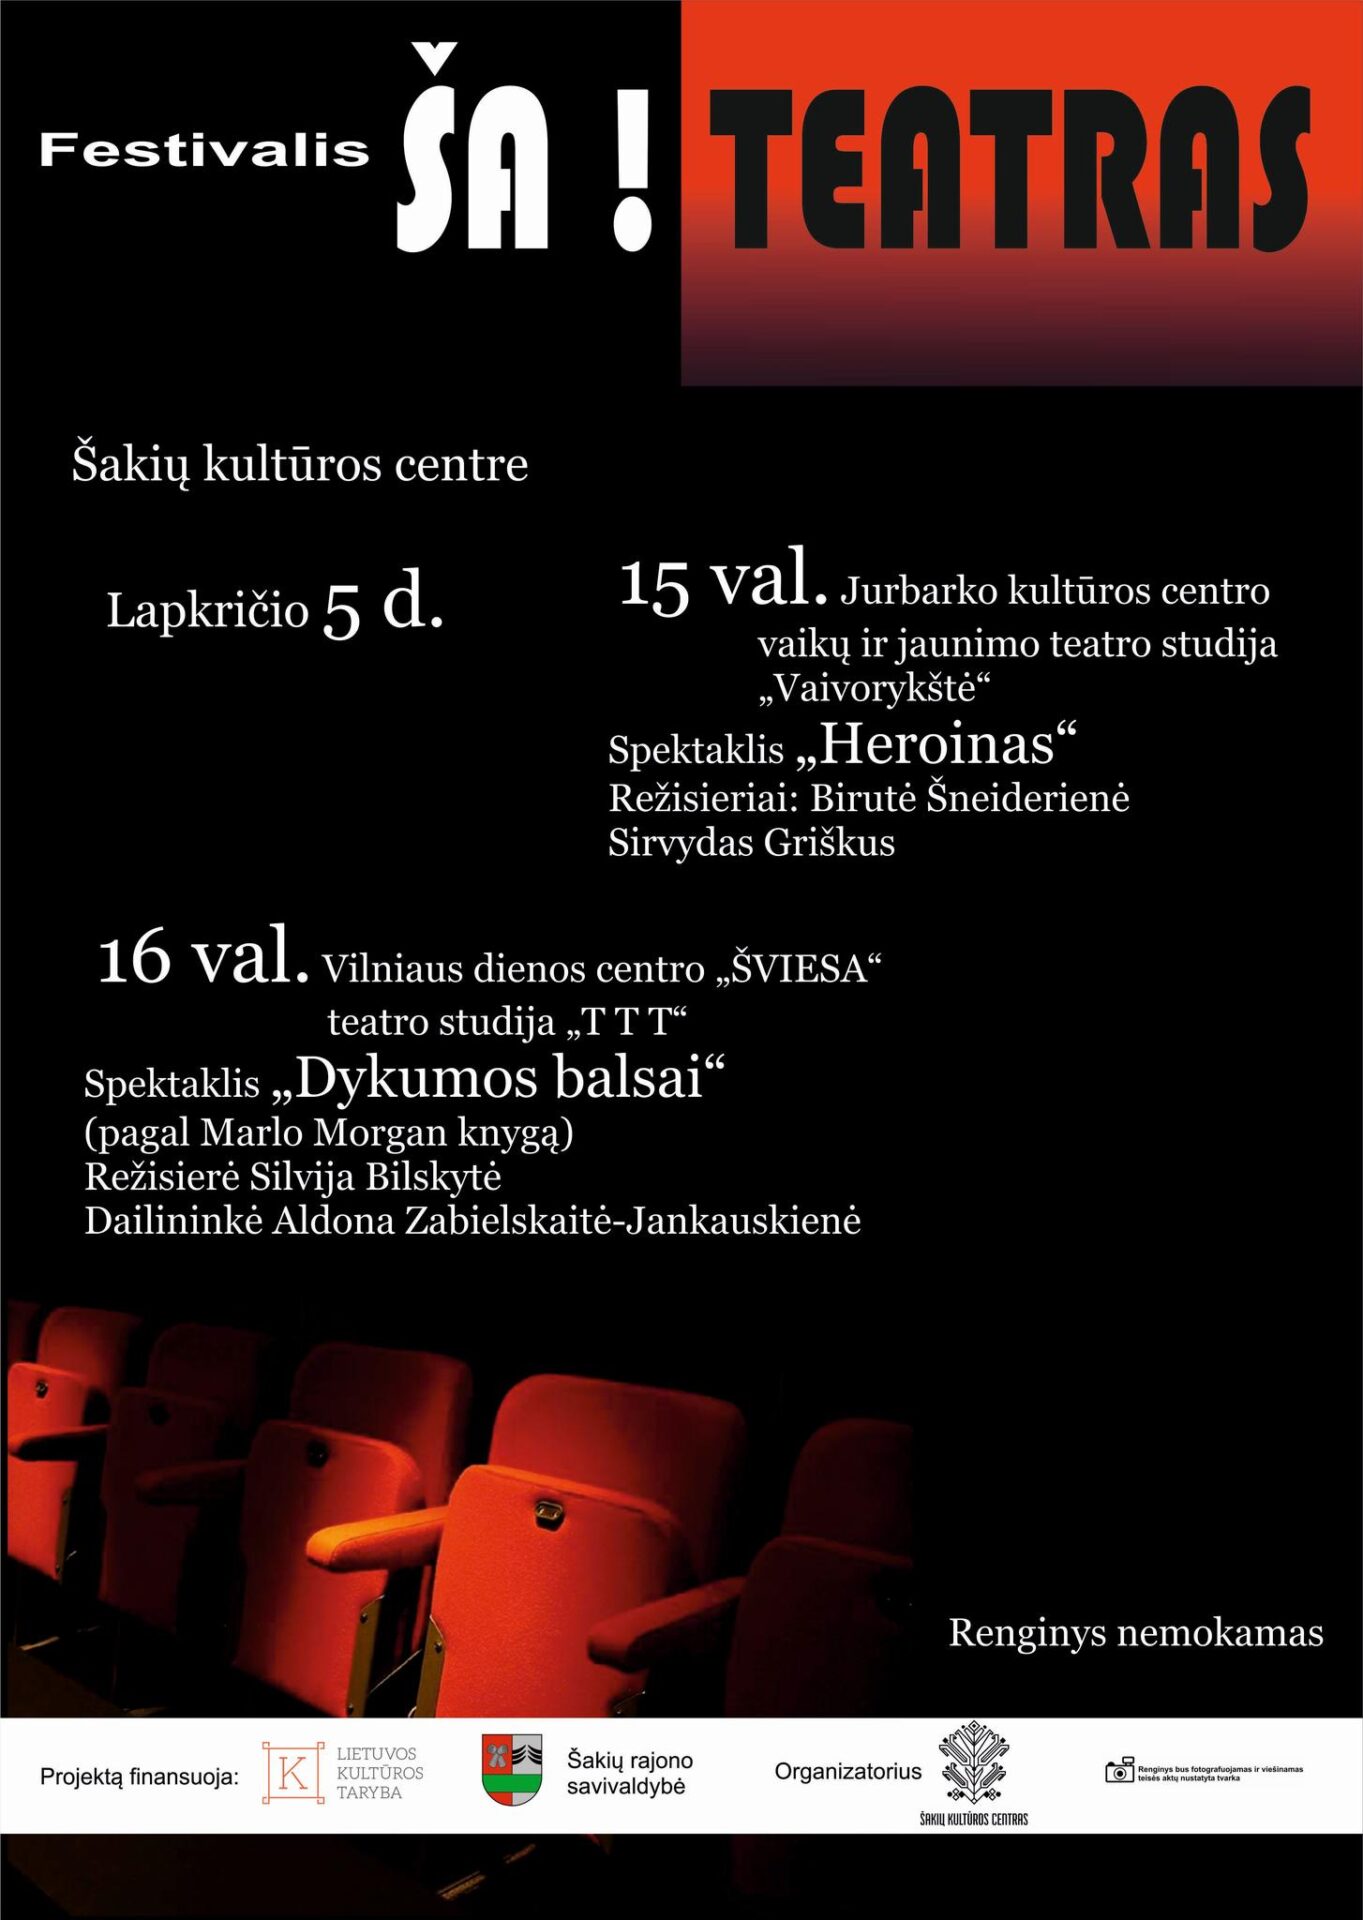 Festivalis Ša! Teatras